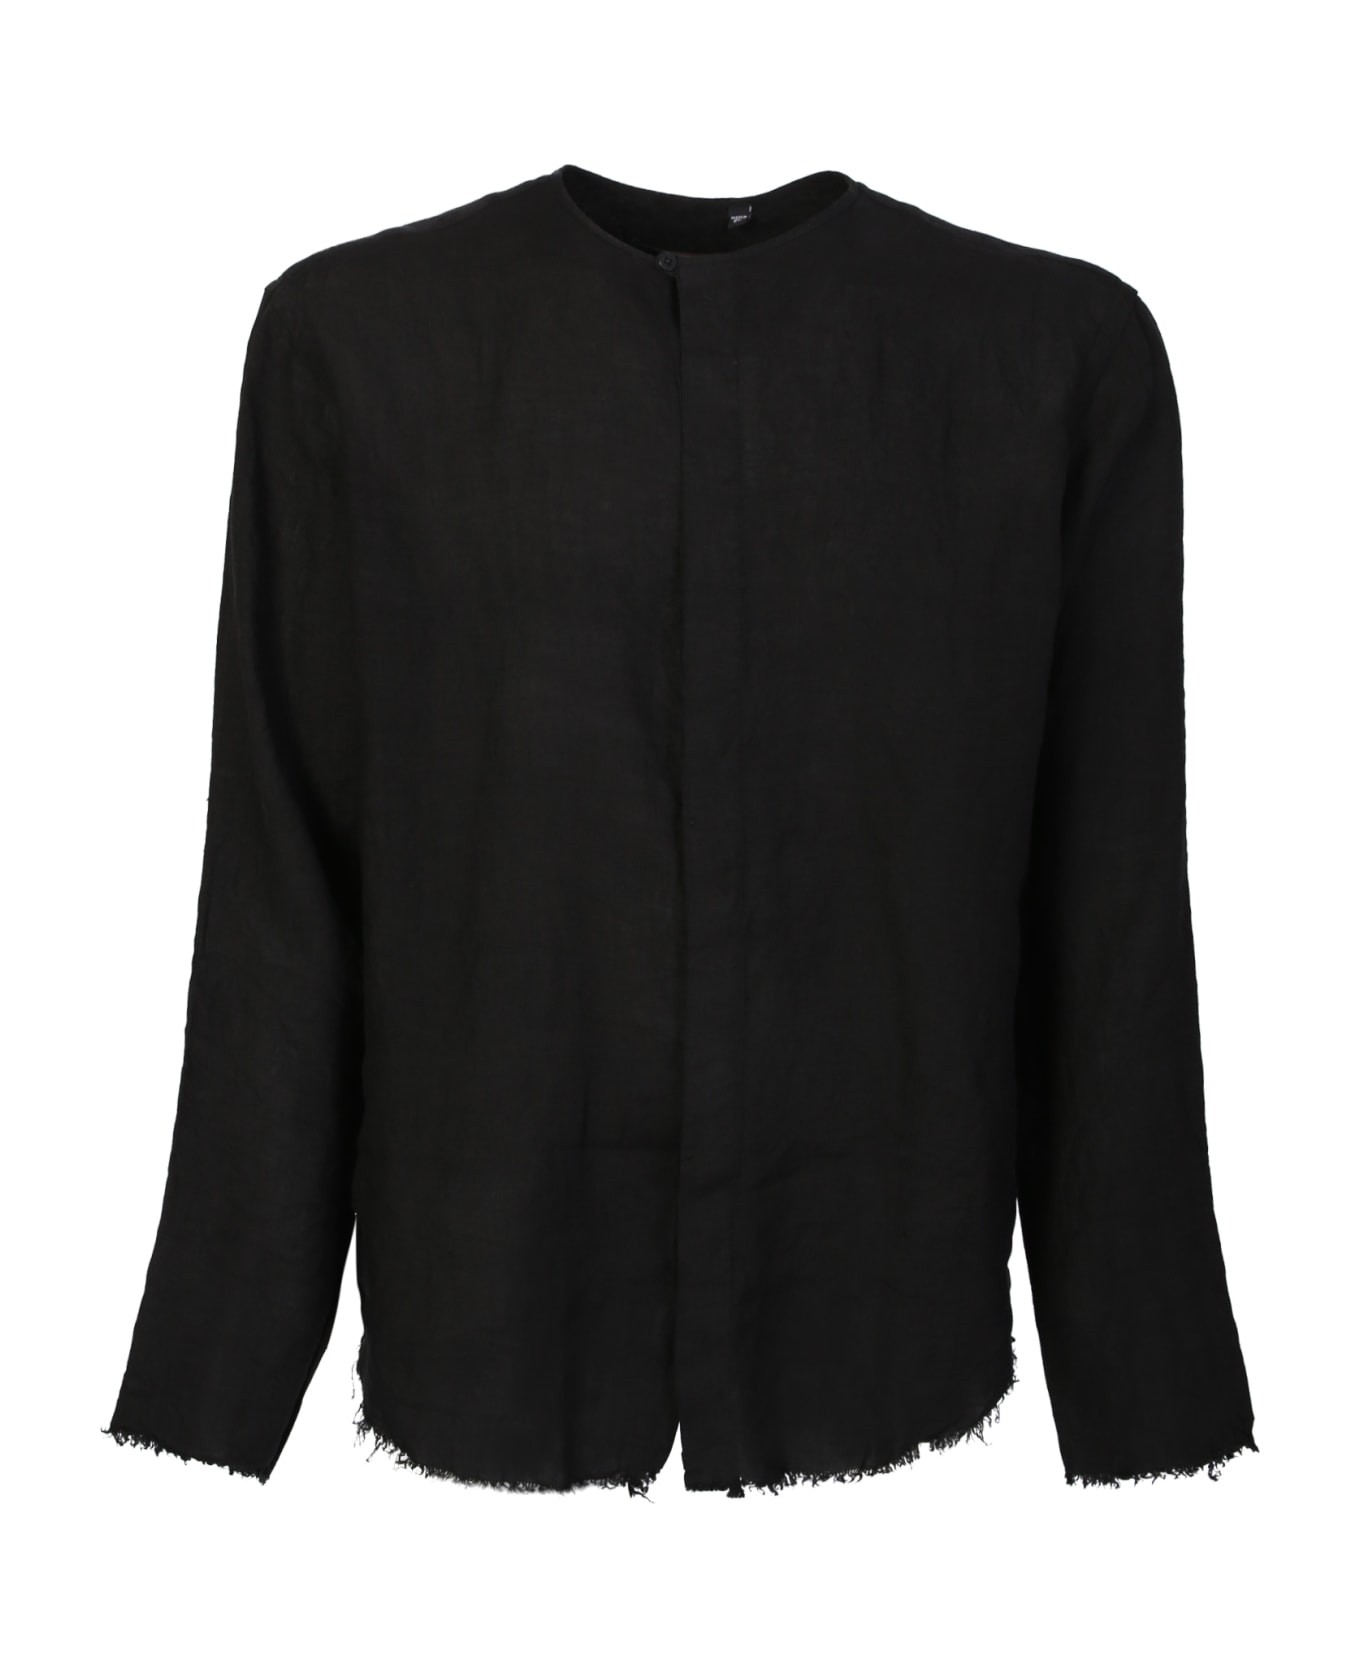 costumein Frayed Edges Black Shirt - Black シャツ